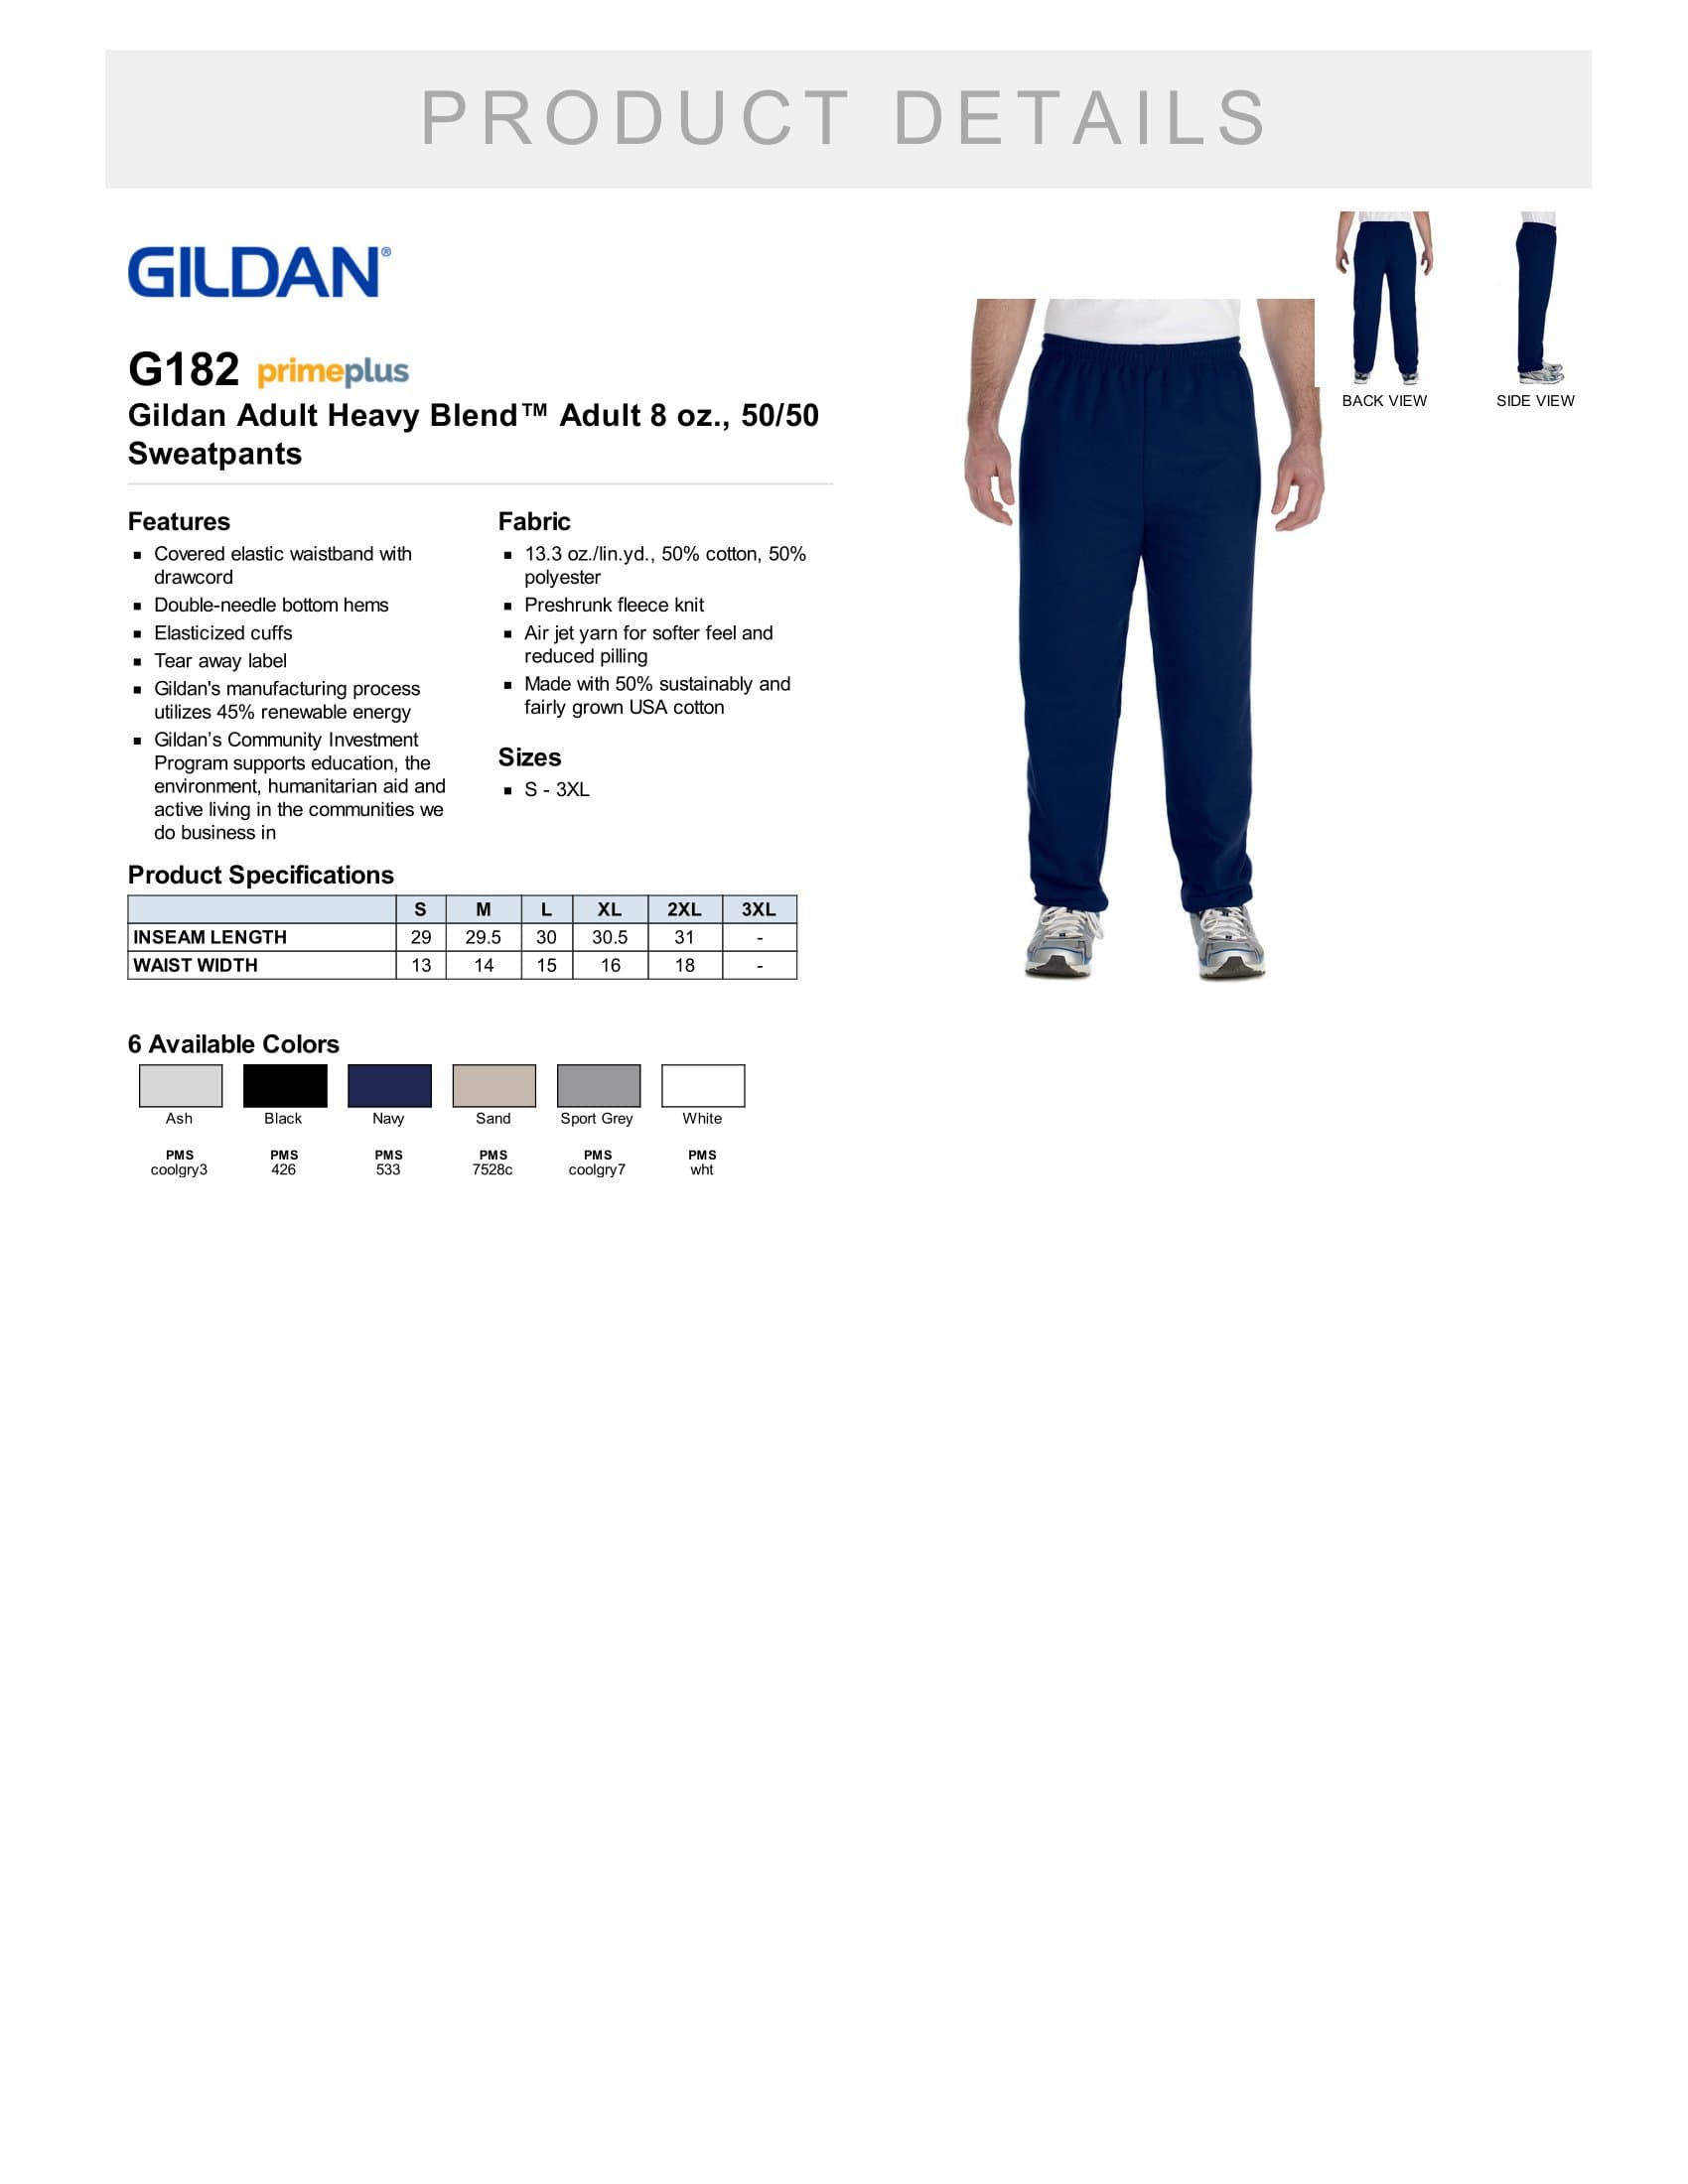 Gildan G182 